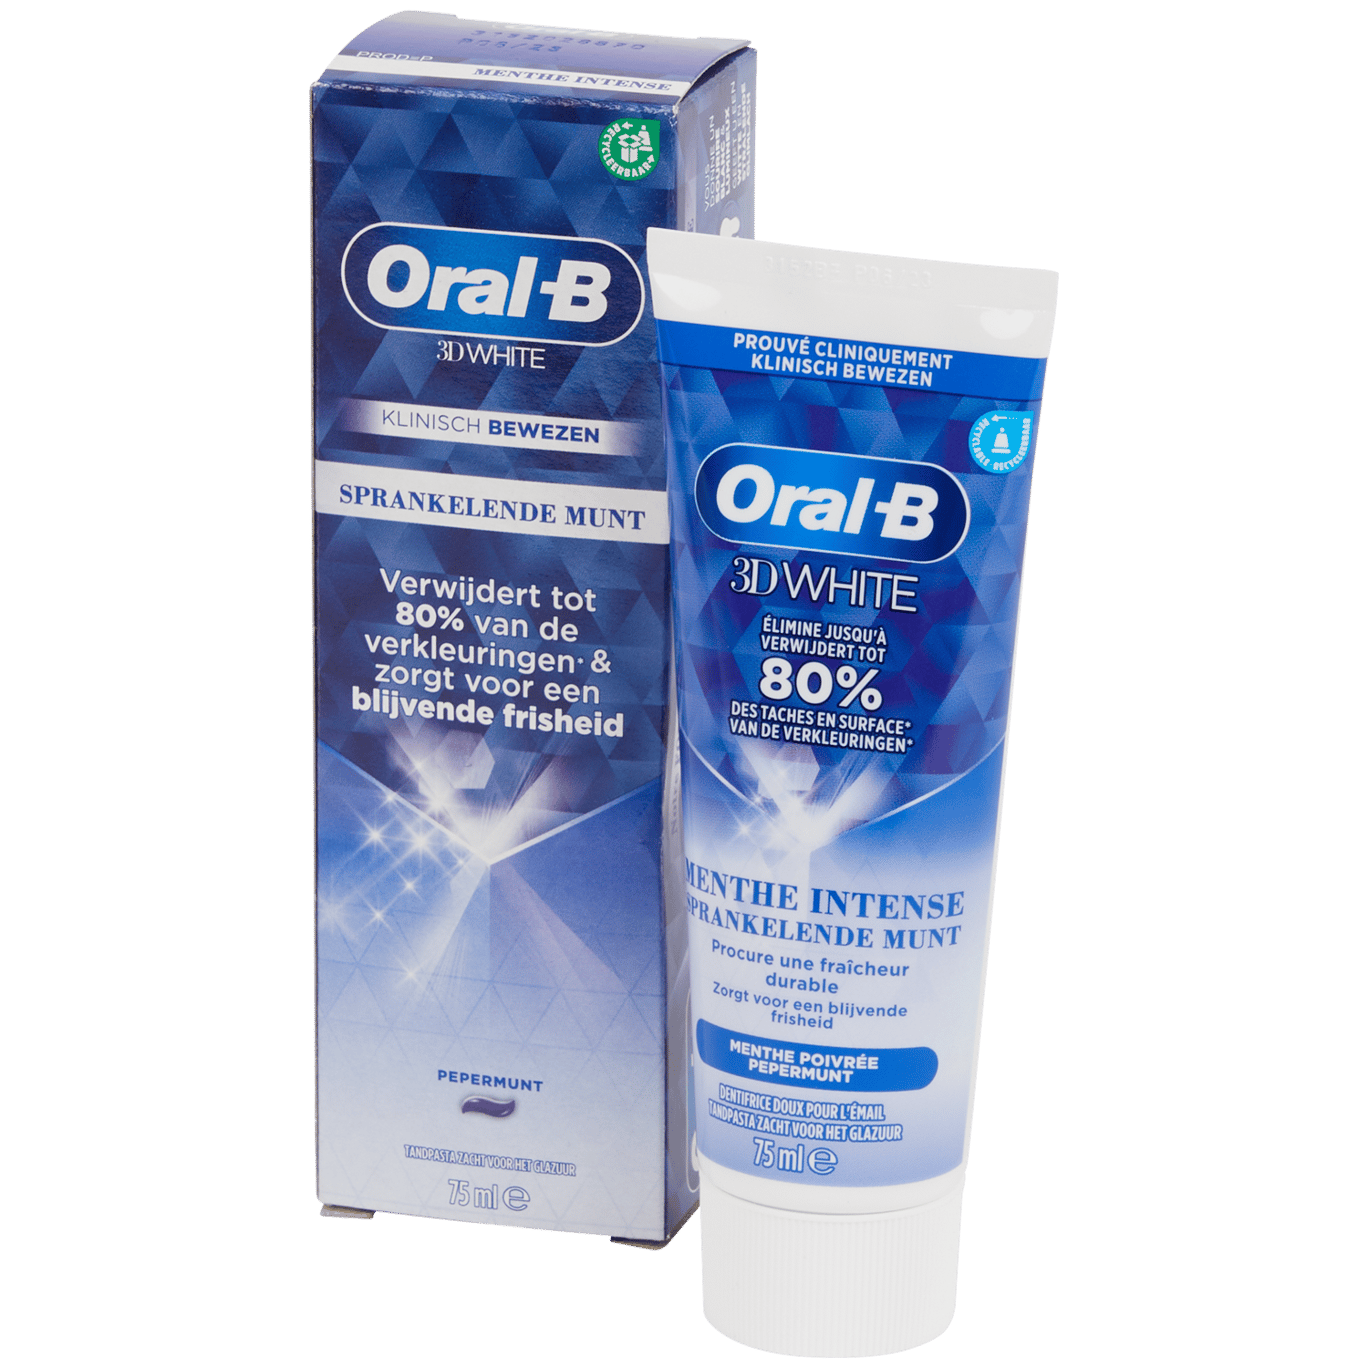 Oral-B 3D White tandpasta Sprankelende Munt